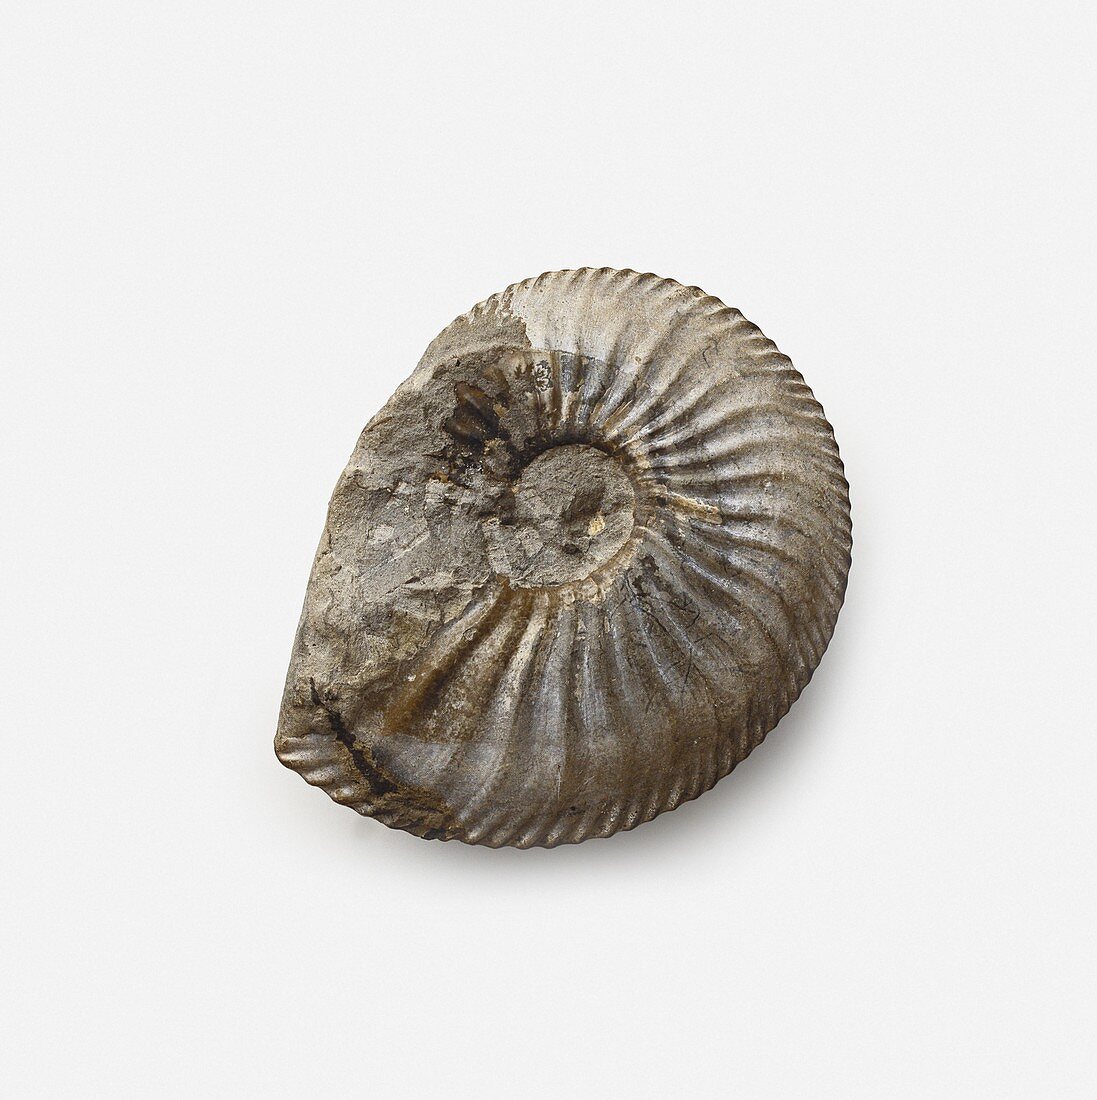 Amaltheus stokesi ammonite shell